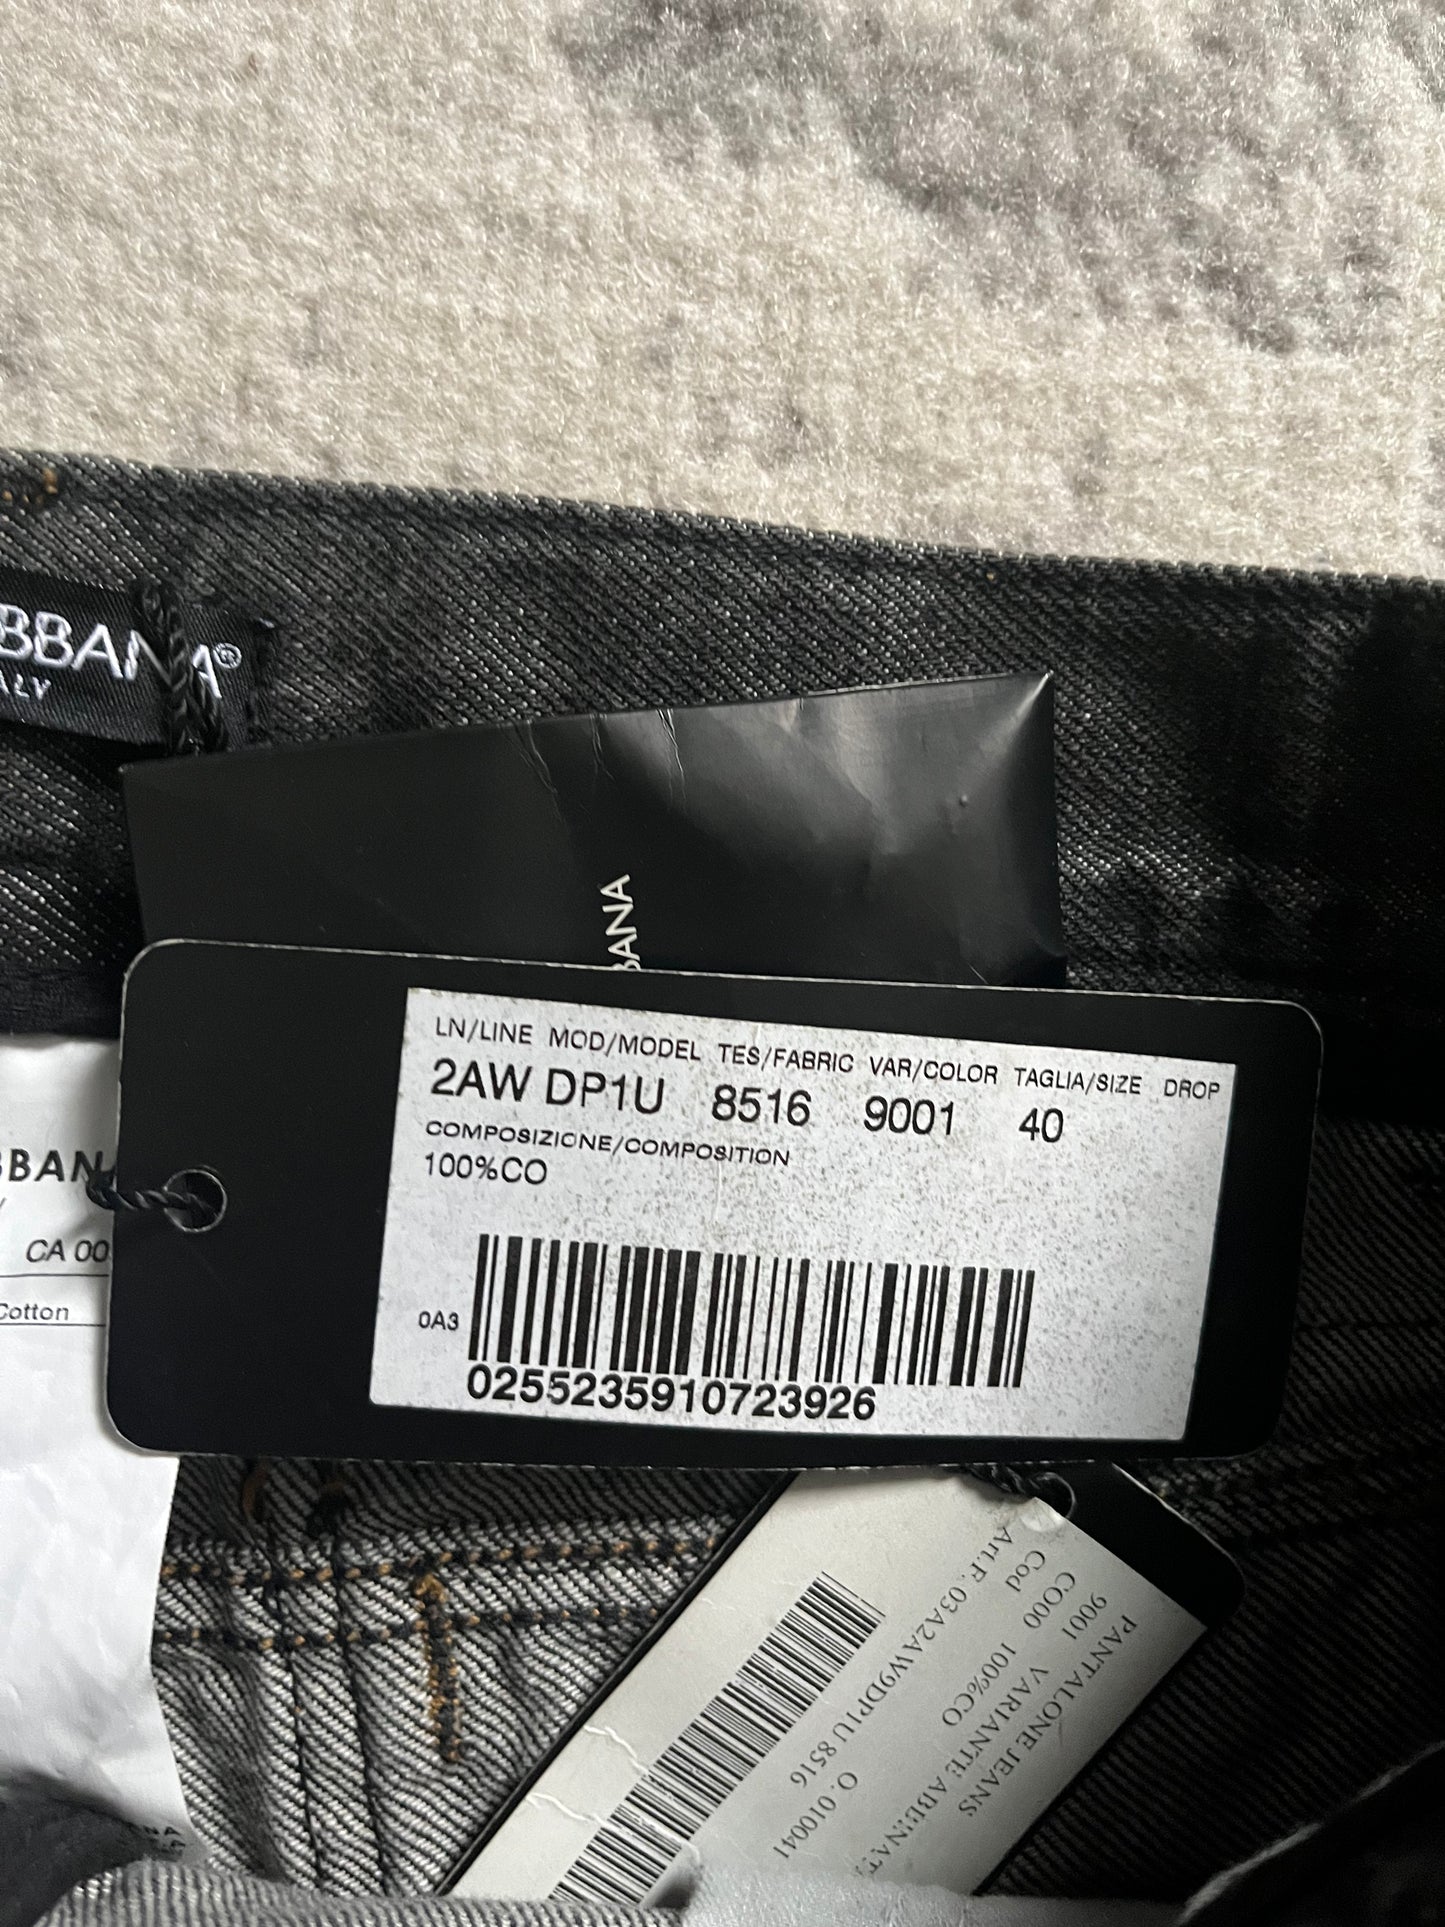 AW03 Dolce & Gabbana Archive Bondage Denim Jeans (S)